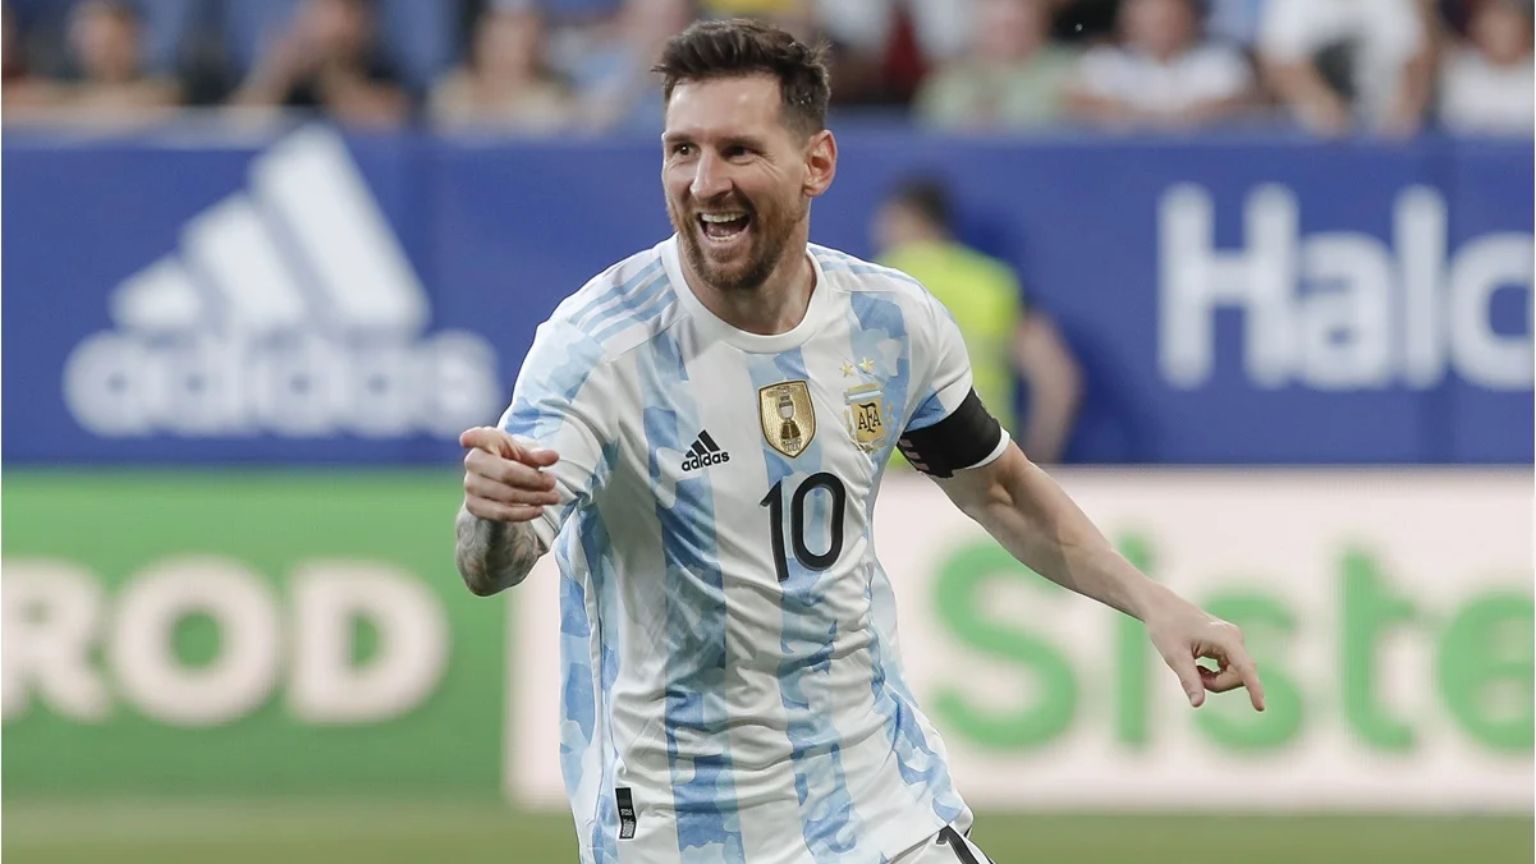 Es un placer ver a Messi, es patrimonio del futbol mundial Scaloni